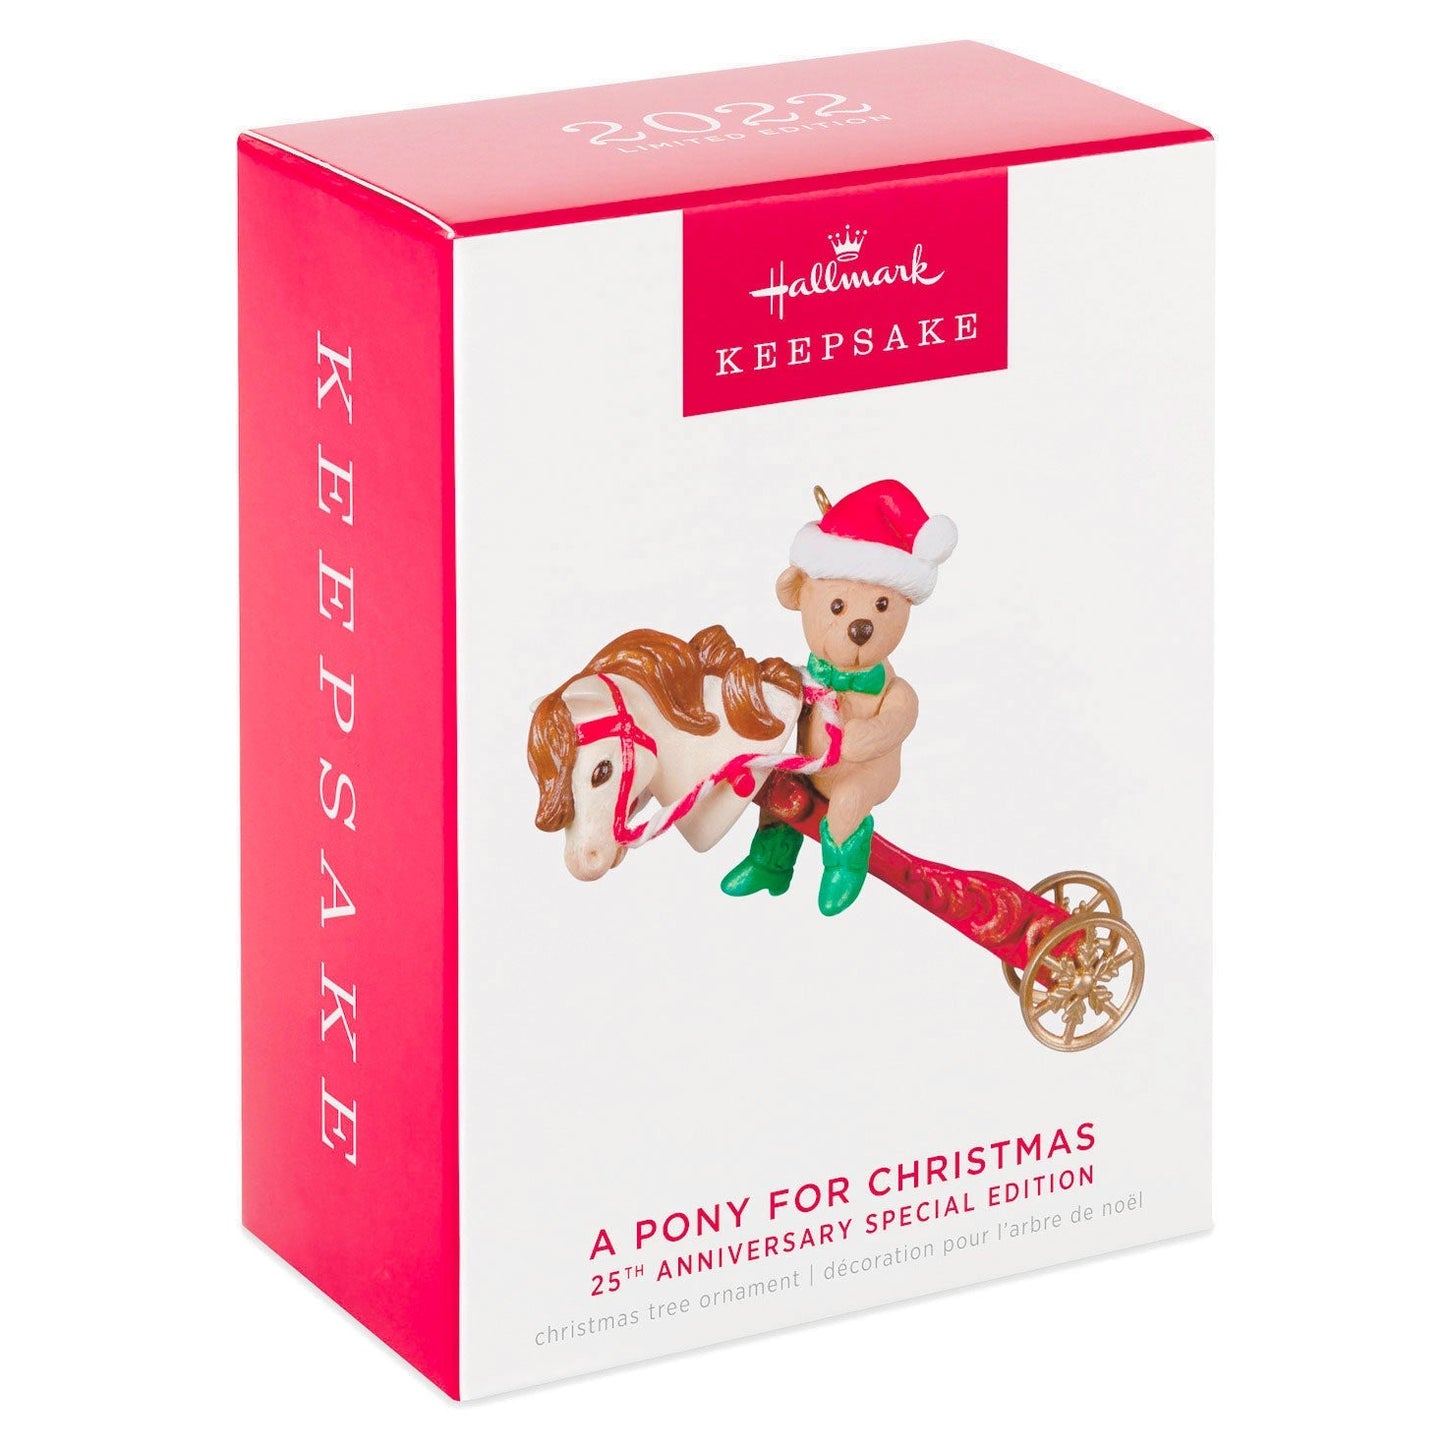 Hallmark Keepsake Christmas Ornament 2022, A Pony For Christmas 25th Anniversary Special Edition Limited Quantity